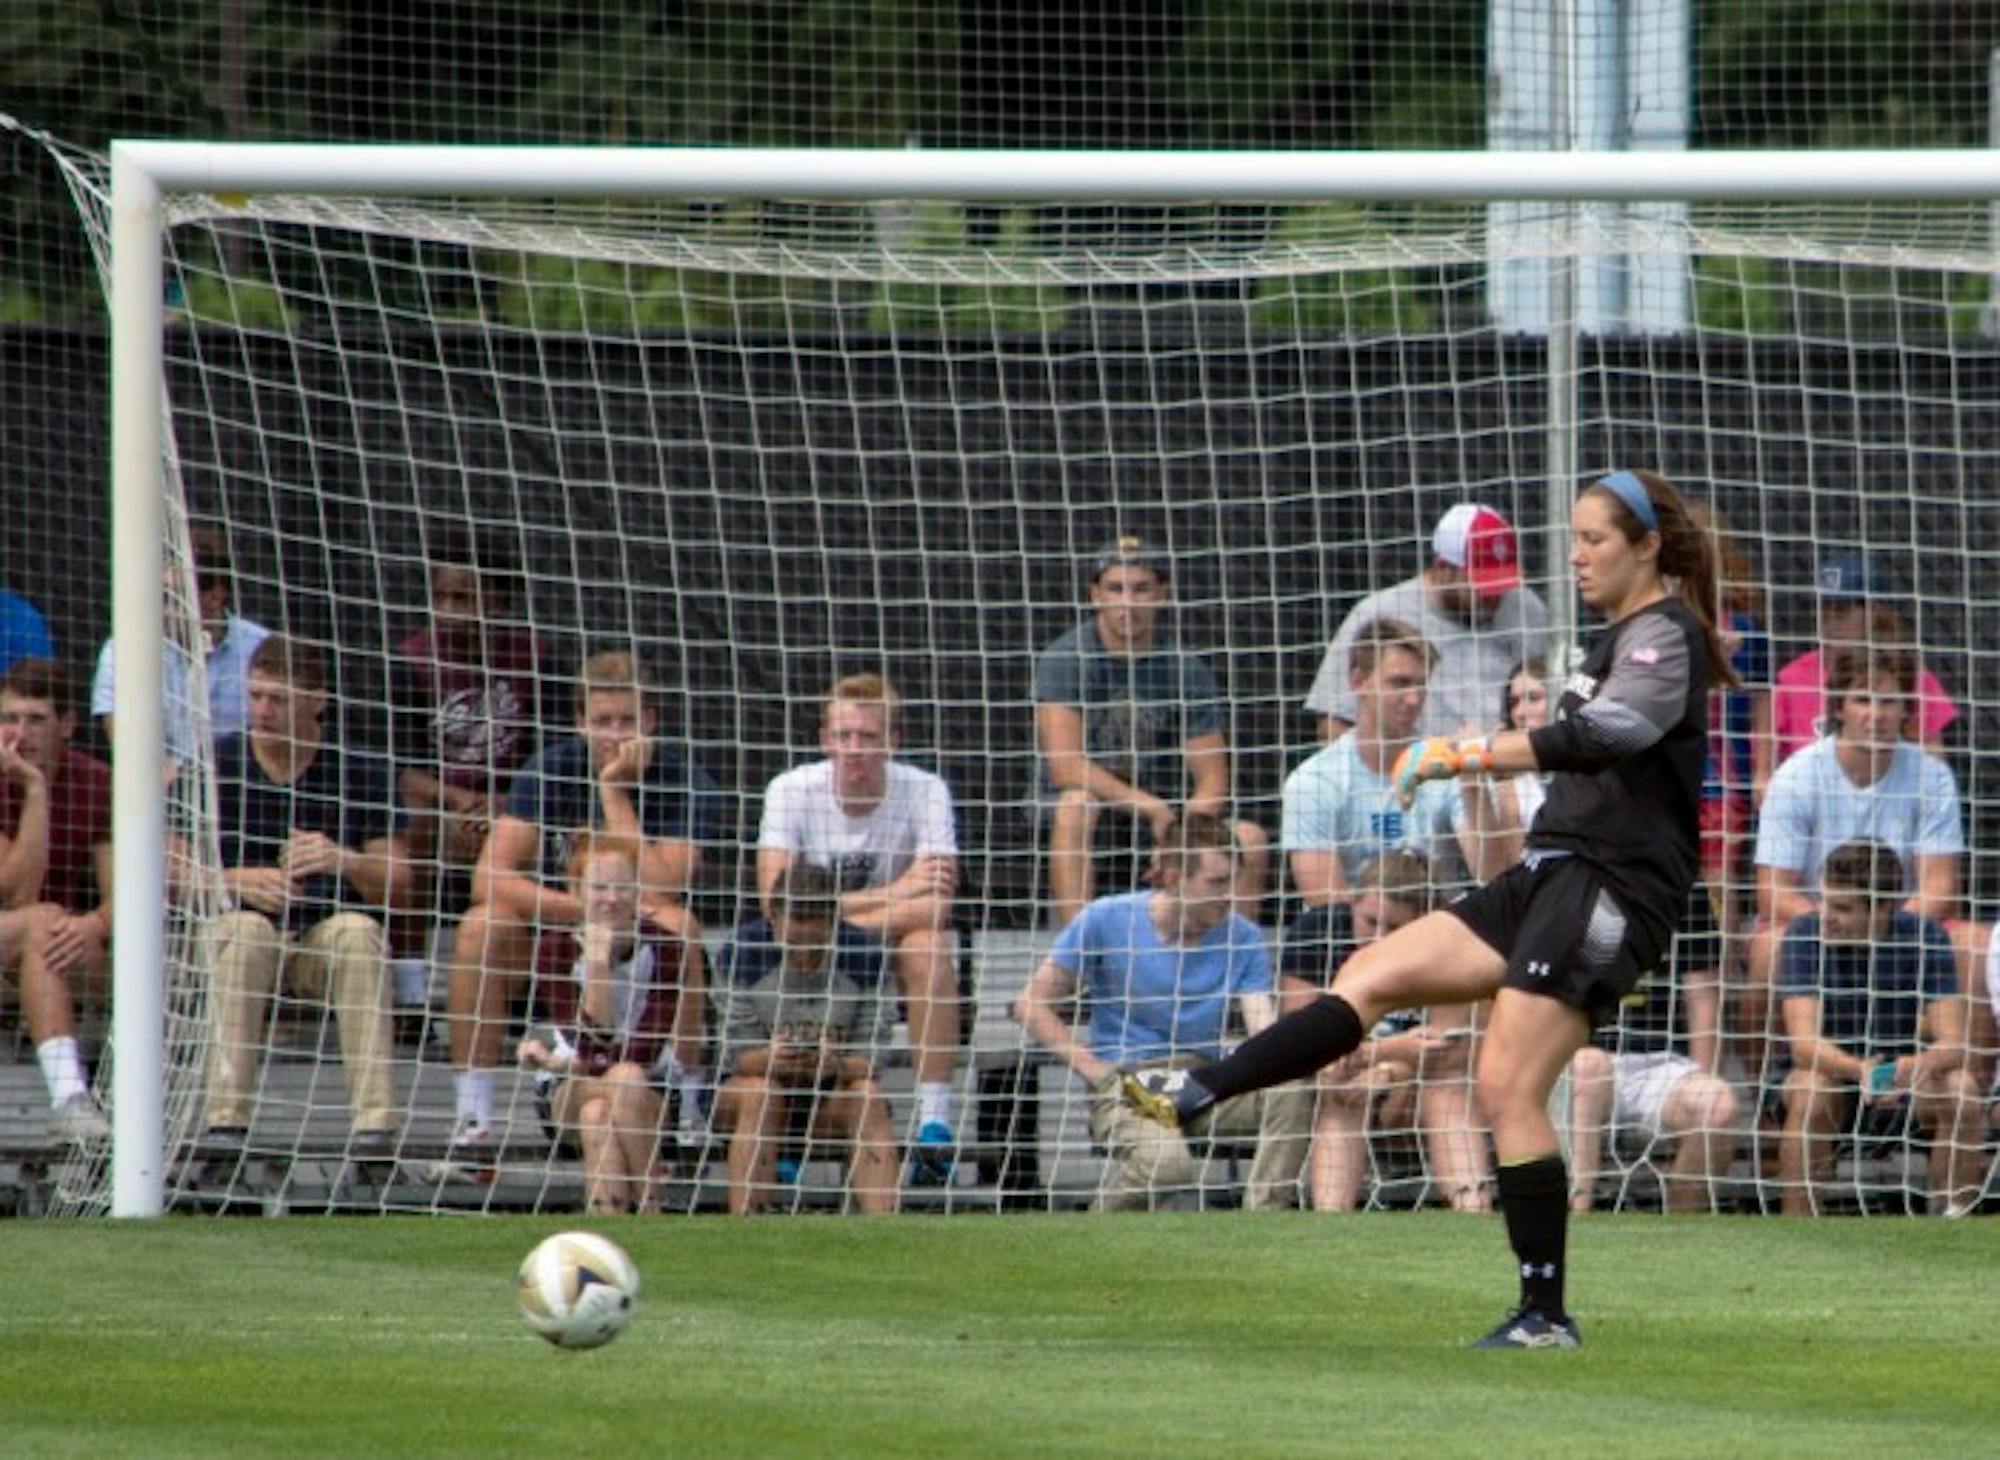 Irish goalkeeper Kaela Little passes the ball during a 1-0 win against Wisconsin on Aug. 21.